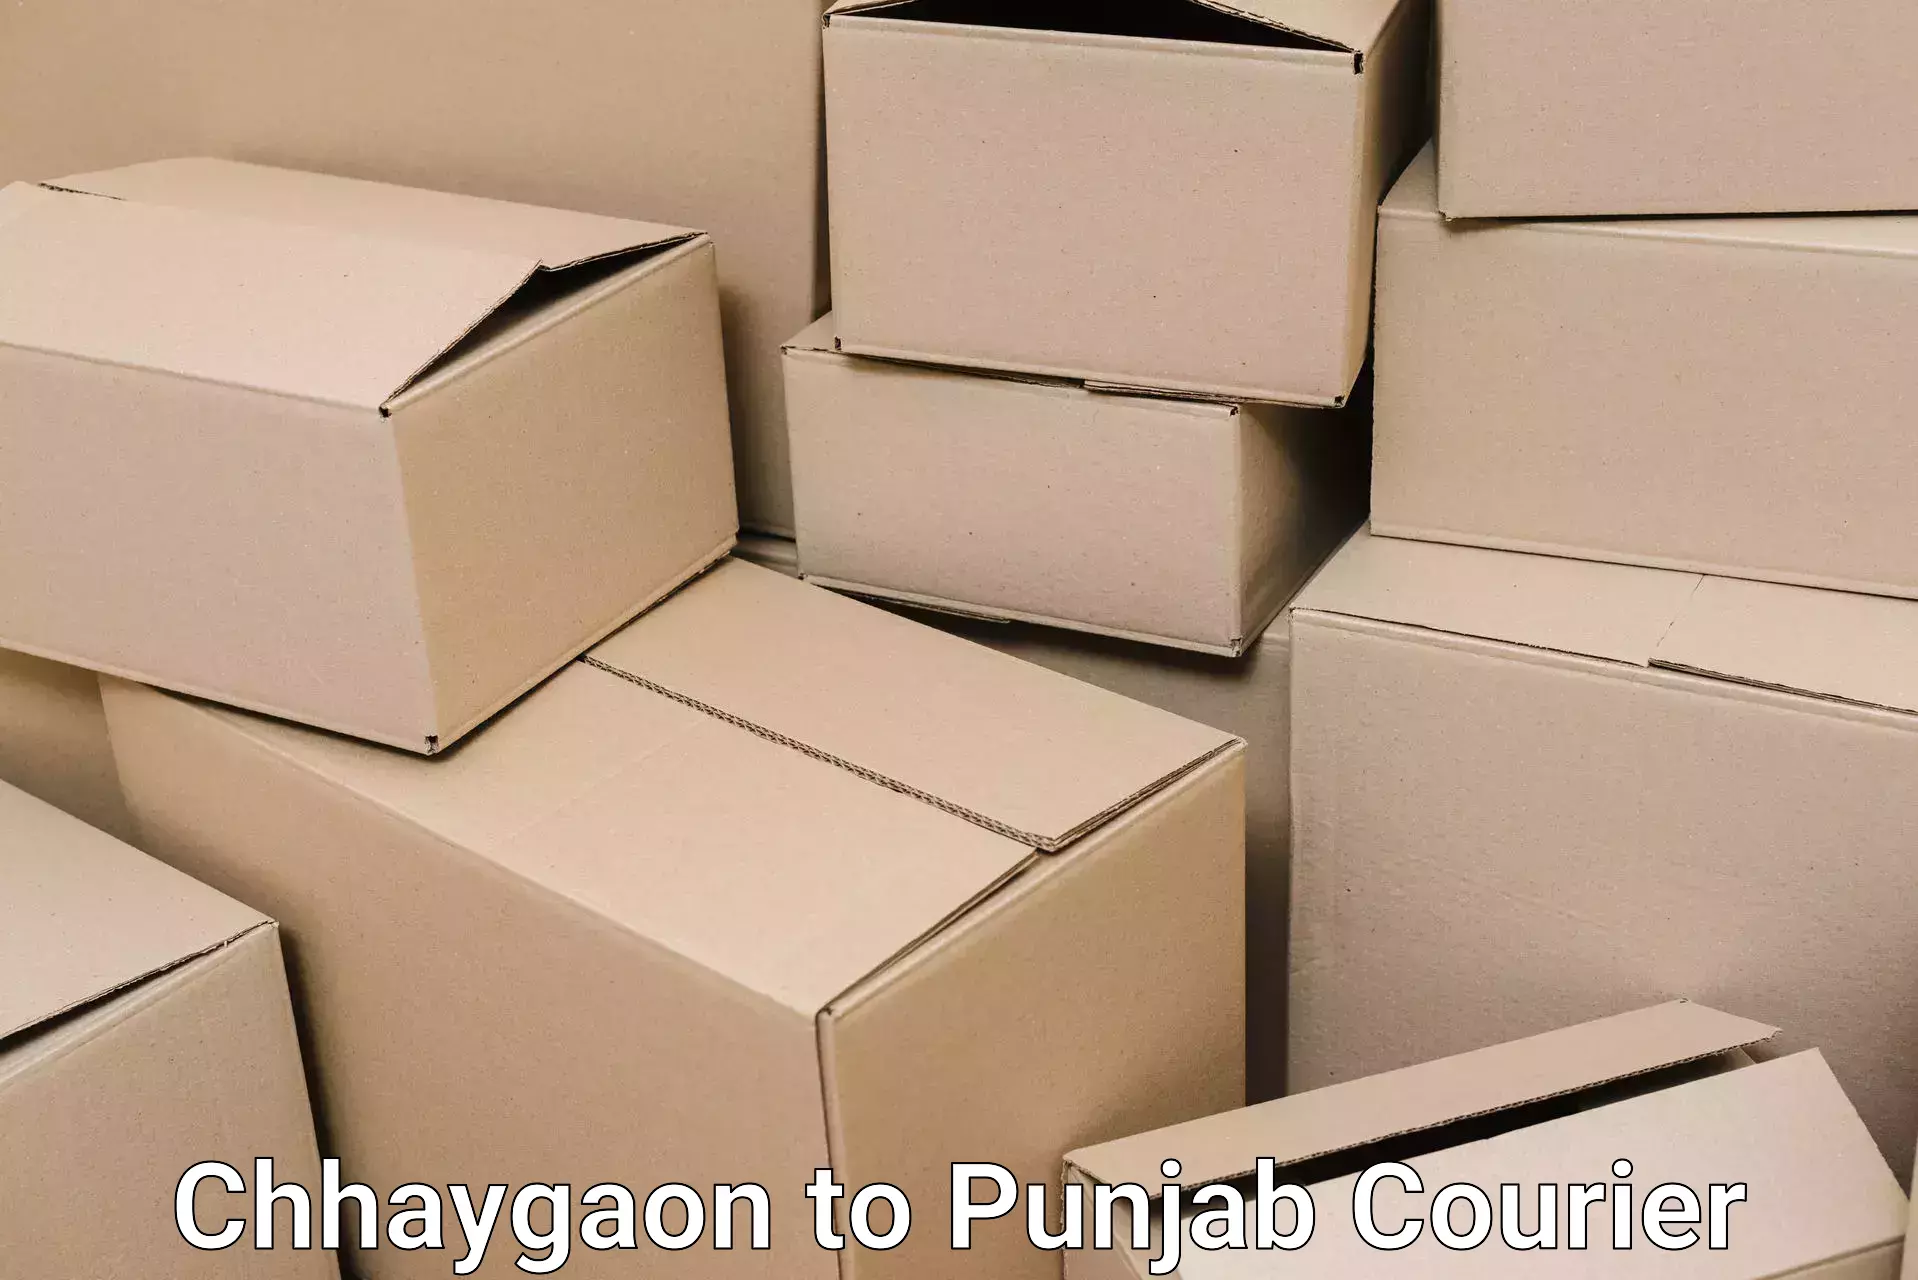 Quality moving company Chhaygaon to Faridkot